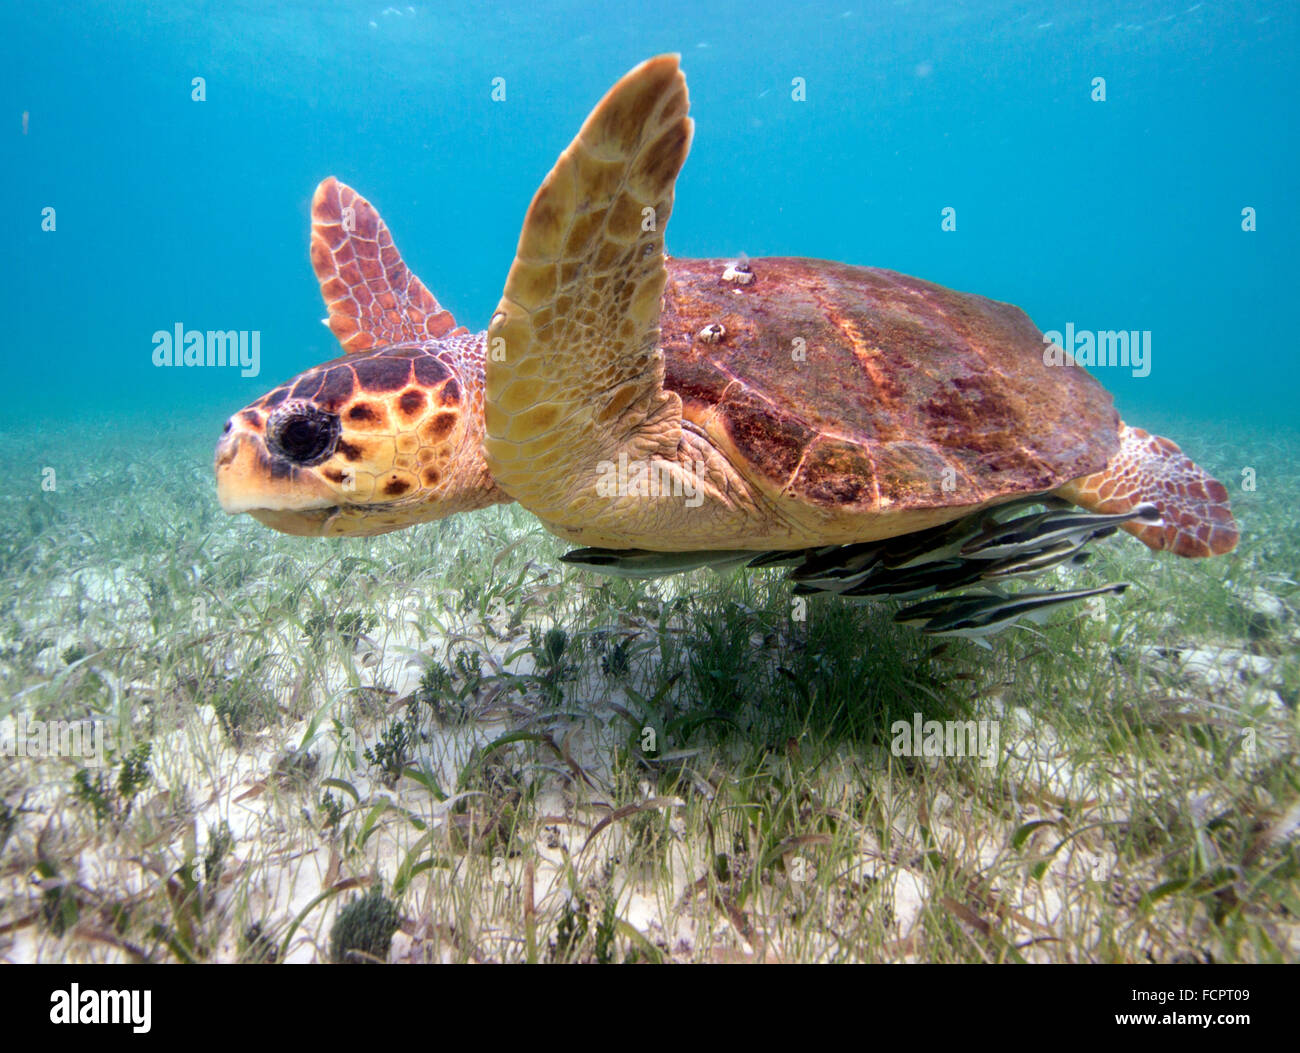 Unechte Karettschildkröte in der Karibik Stockfoto